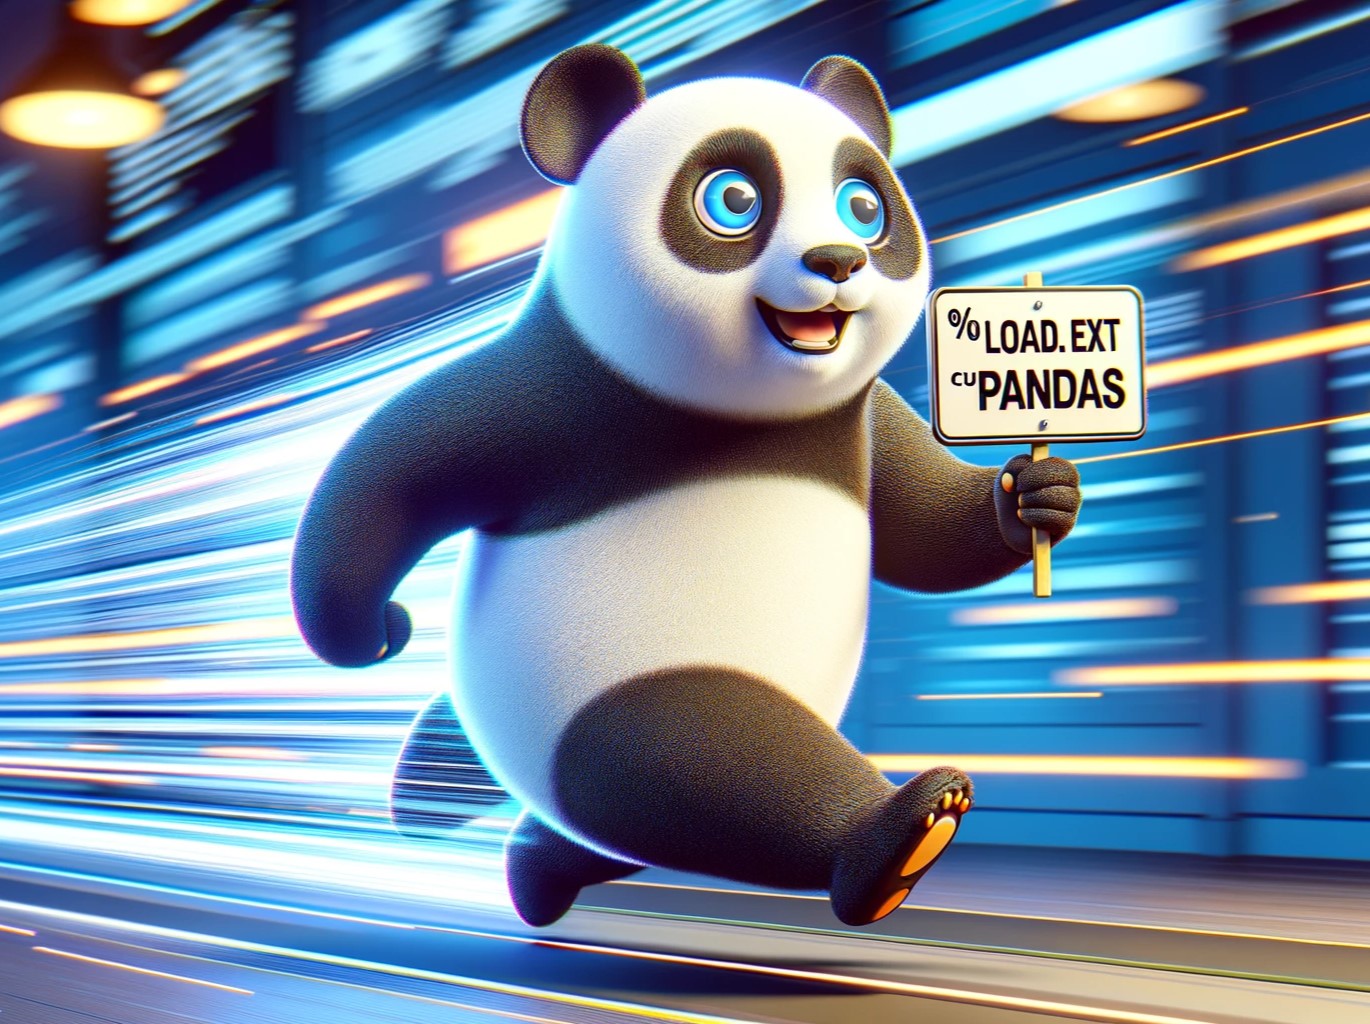 Pandasを150倍速く動かす1行コード%load_ext cudf.pandas